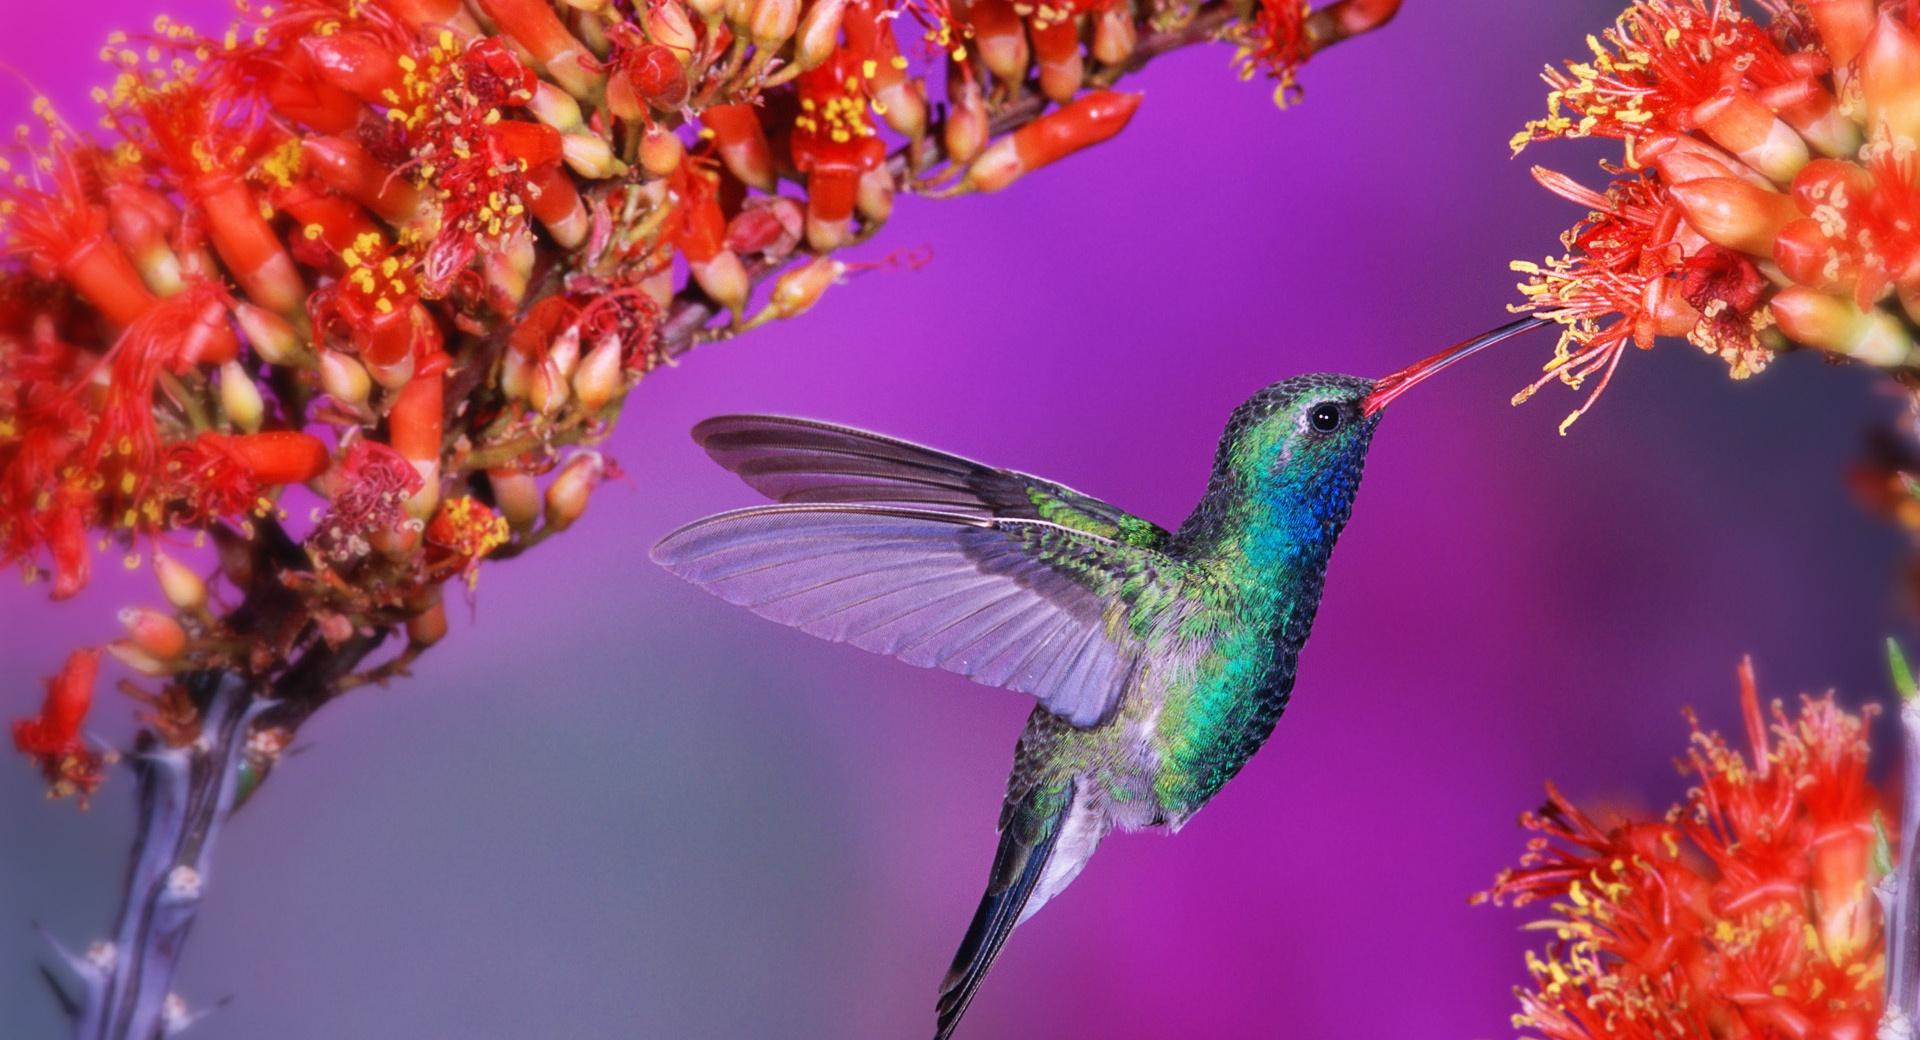 Beautiful Hummingbird at 1280 x 960 size wallpapers HD quality